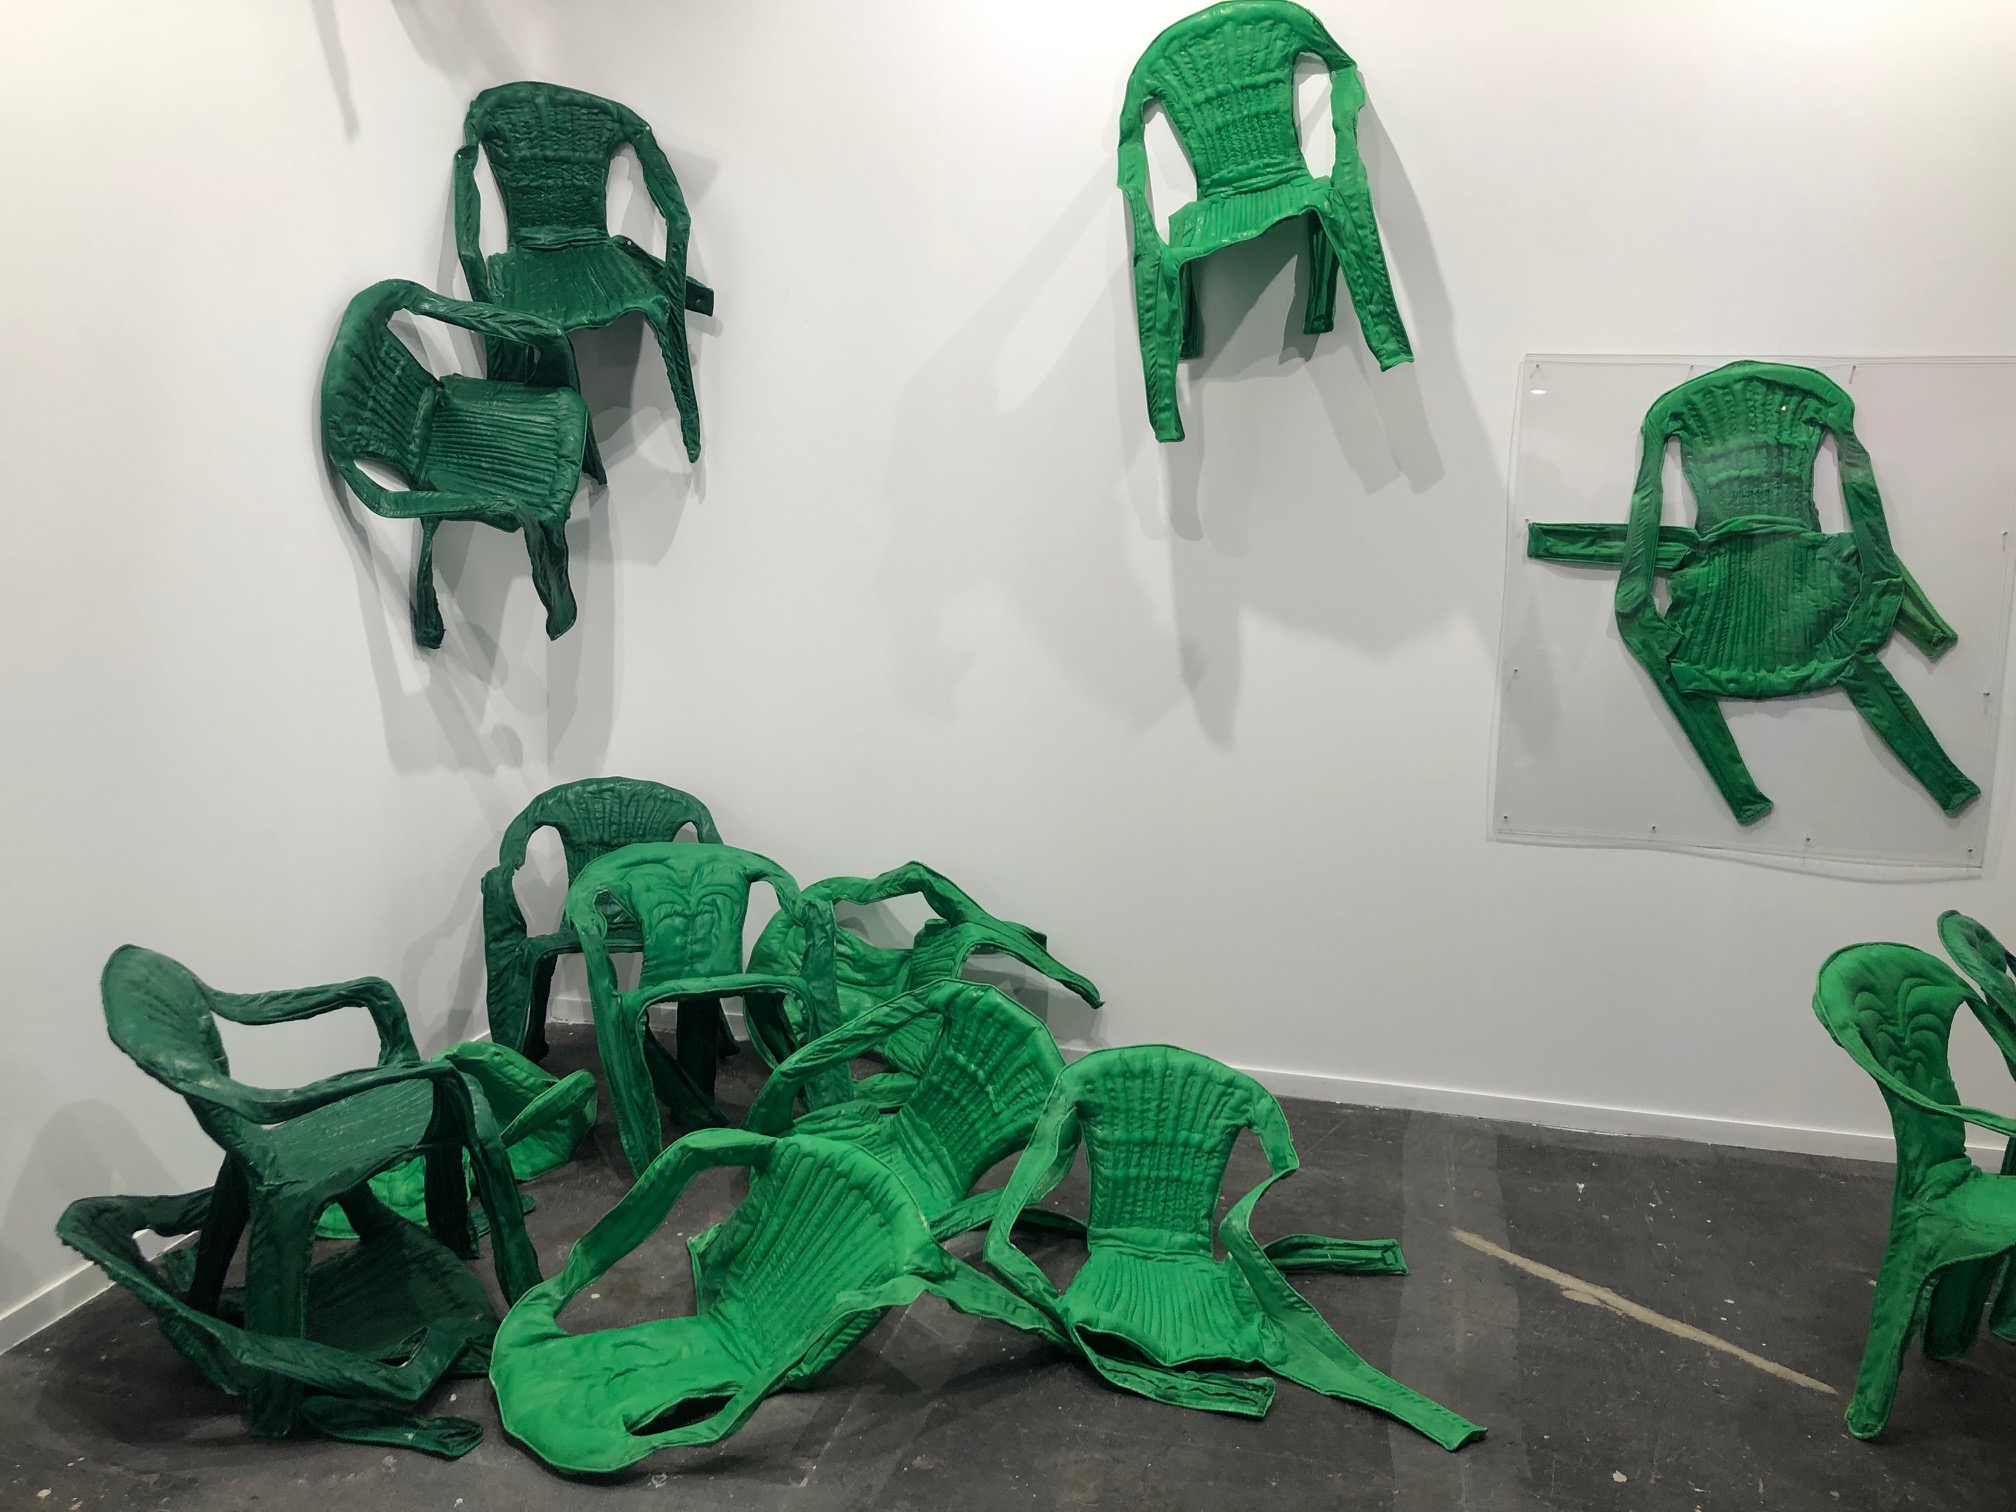 Instalación de sillas. Sandra Poulson.